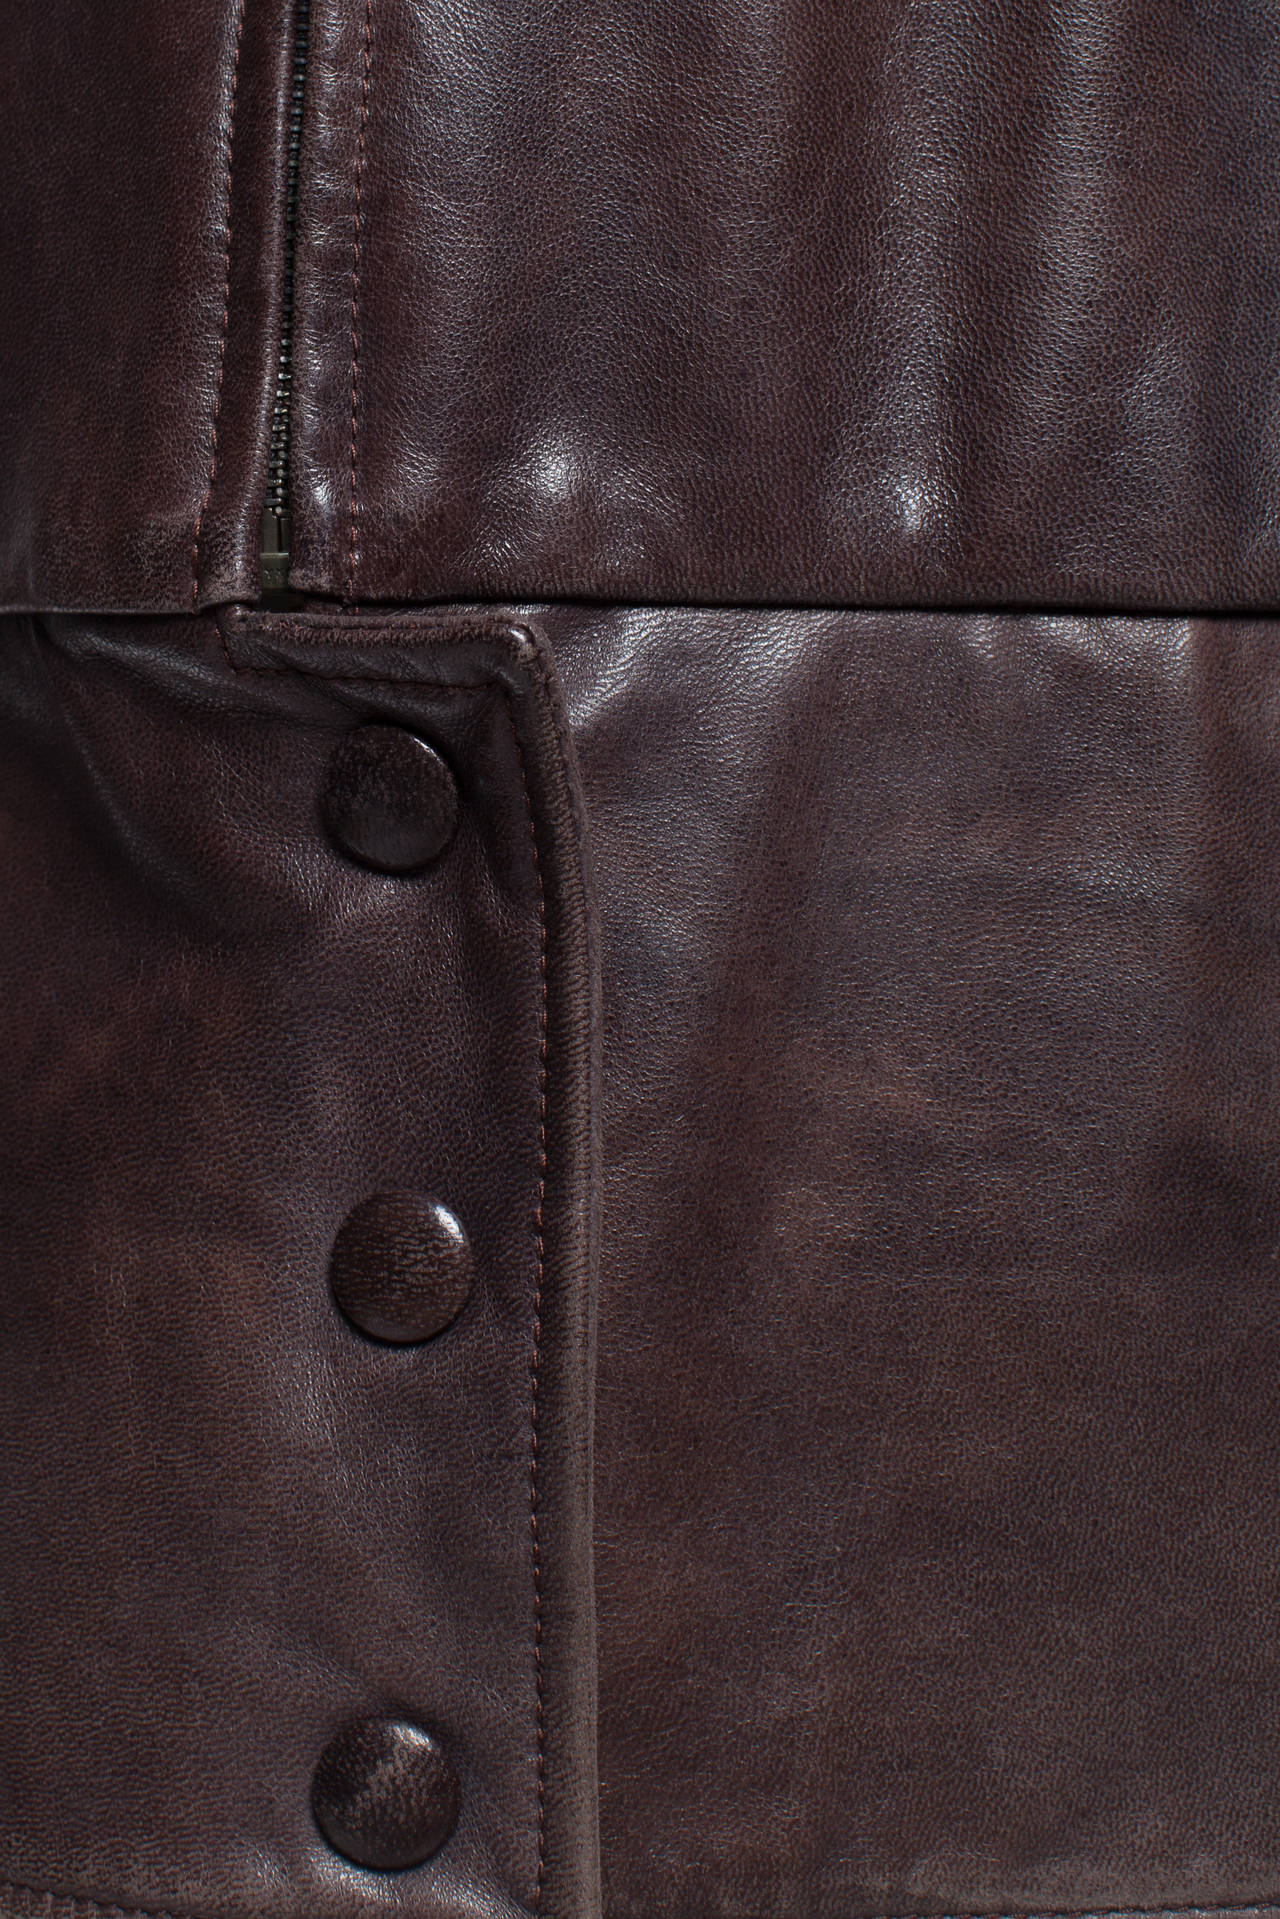 Martin Margiela Vintage Blouson Leather Jacket FW'04, Sz. S For Sale 1